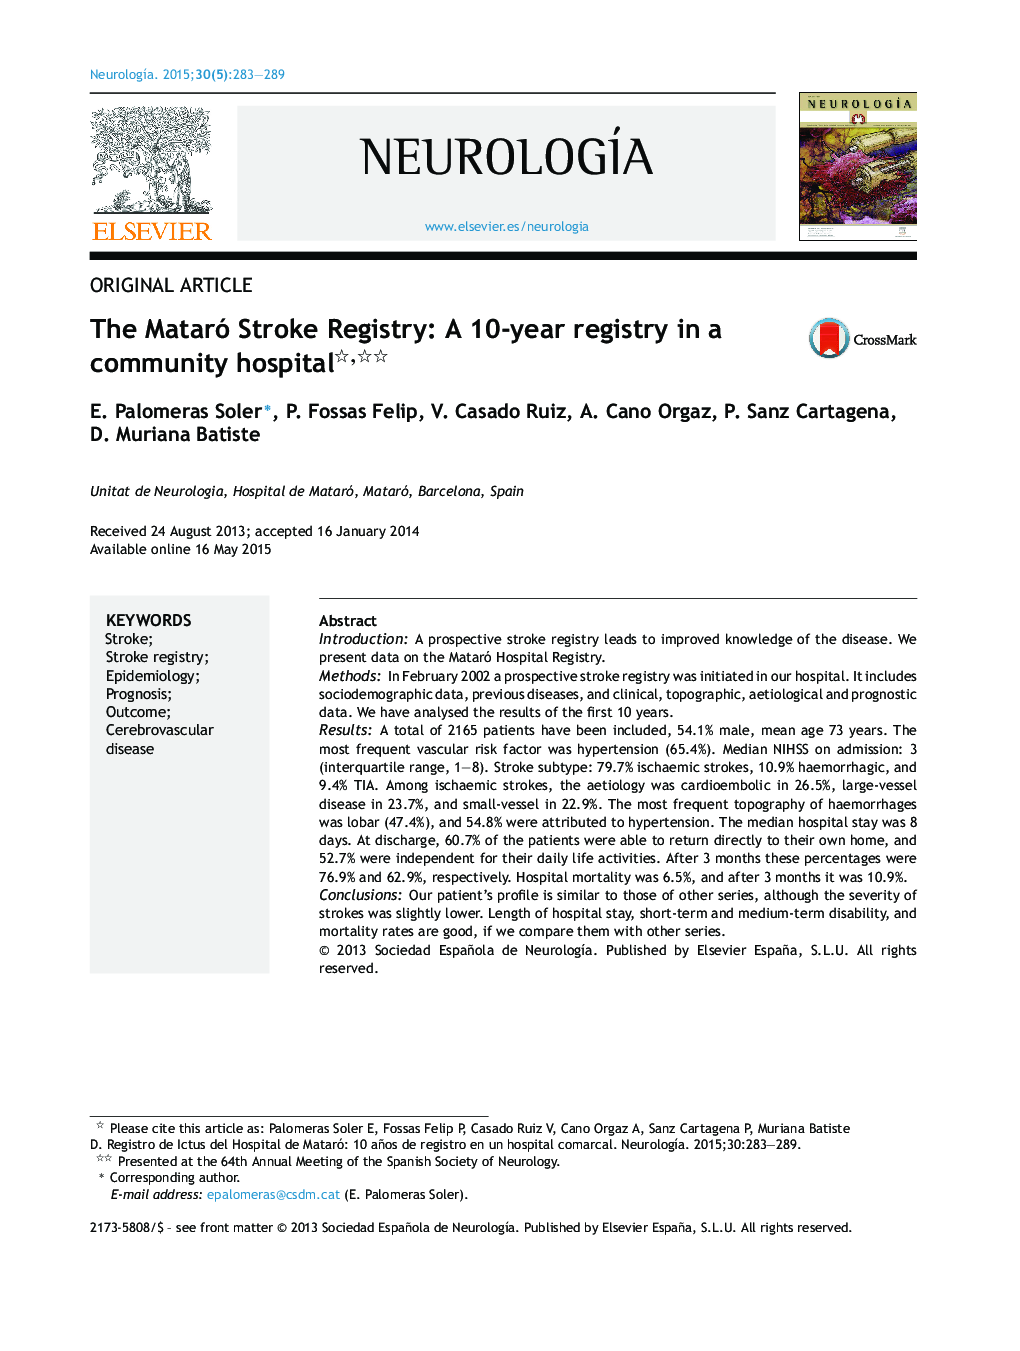 The Mataró Stroke Registry: A 10-year registry in a community hospital